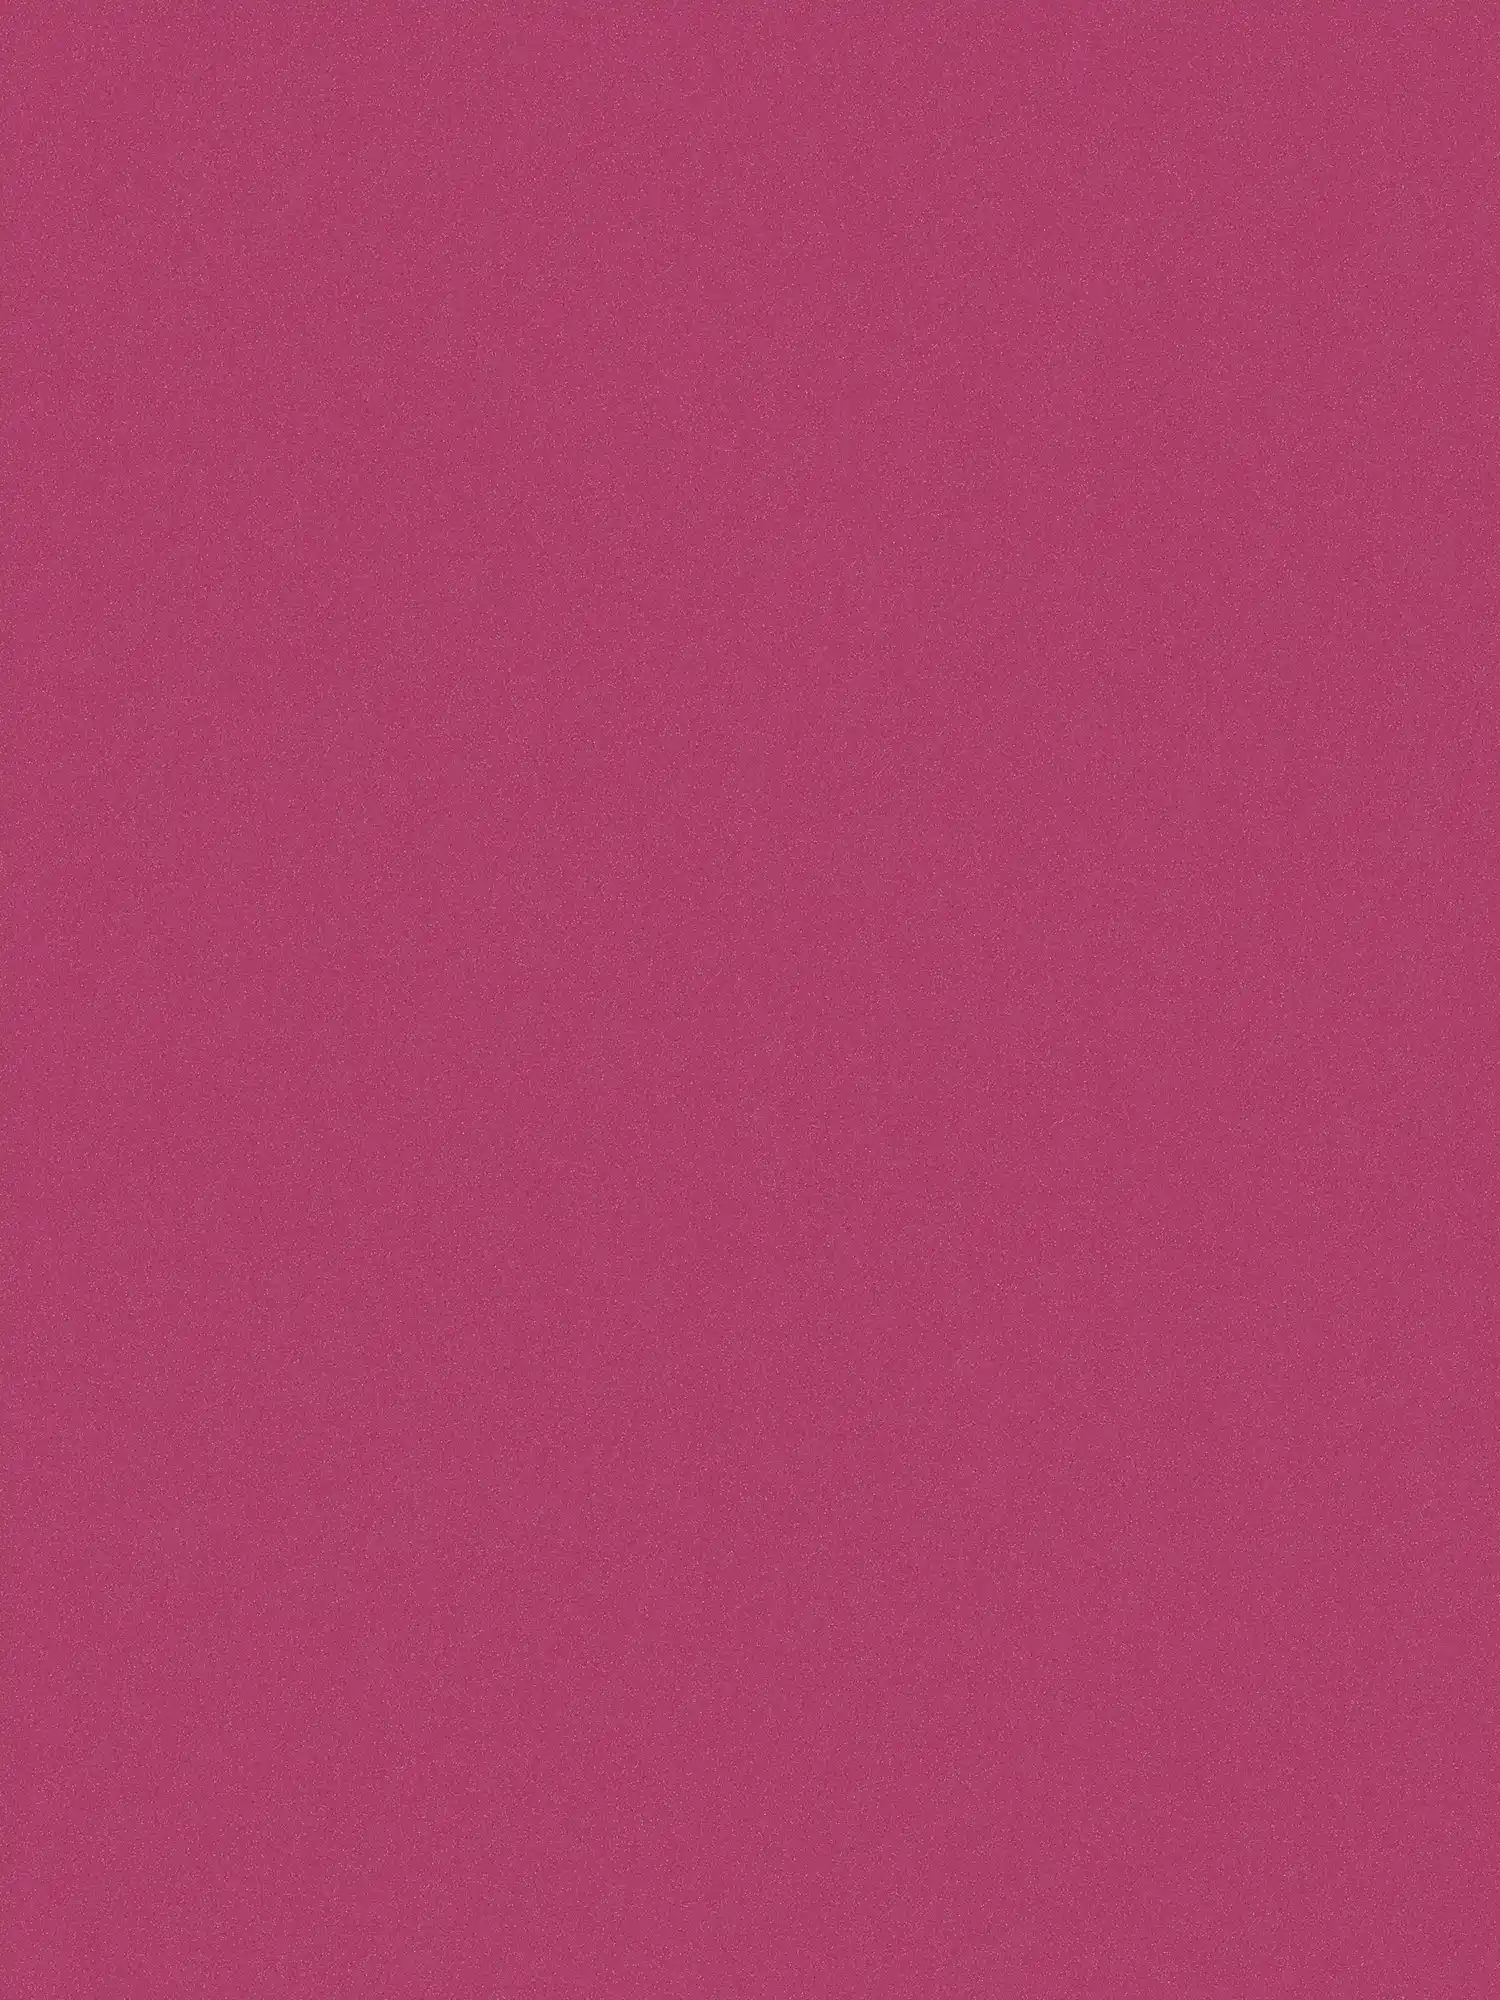 Plain wallpaper warm colour, textured - pink, red
